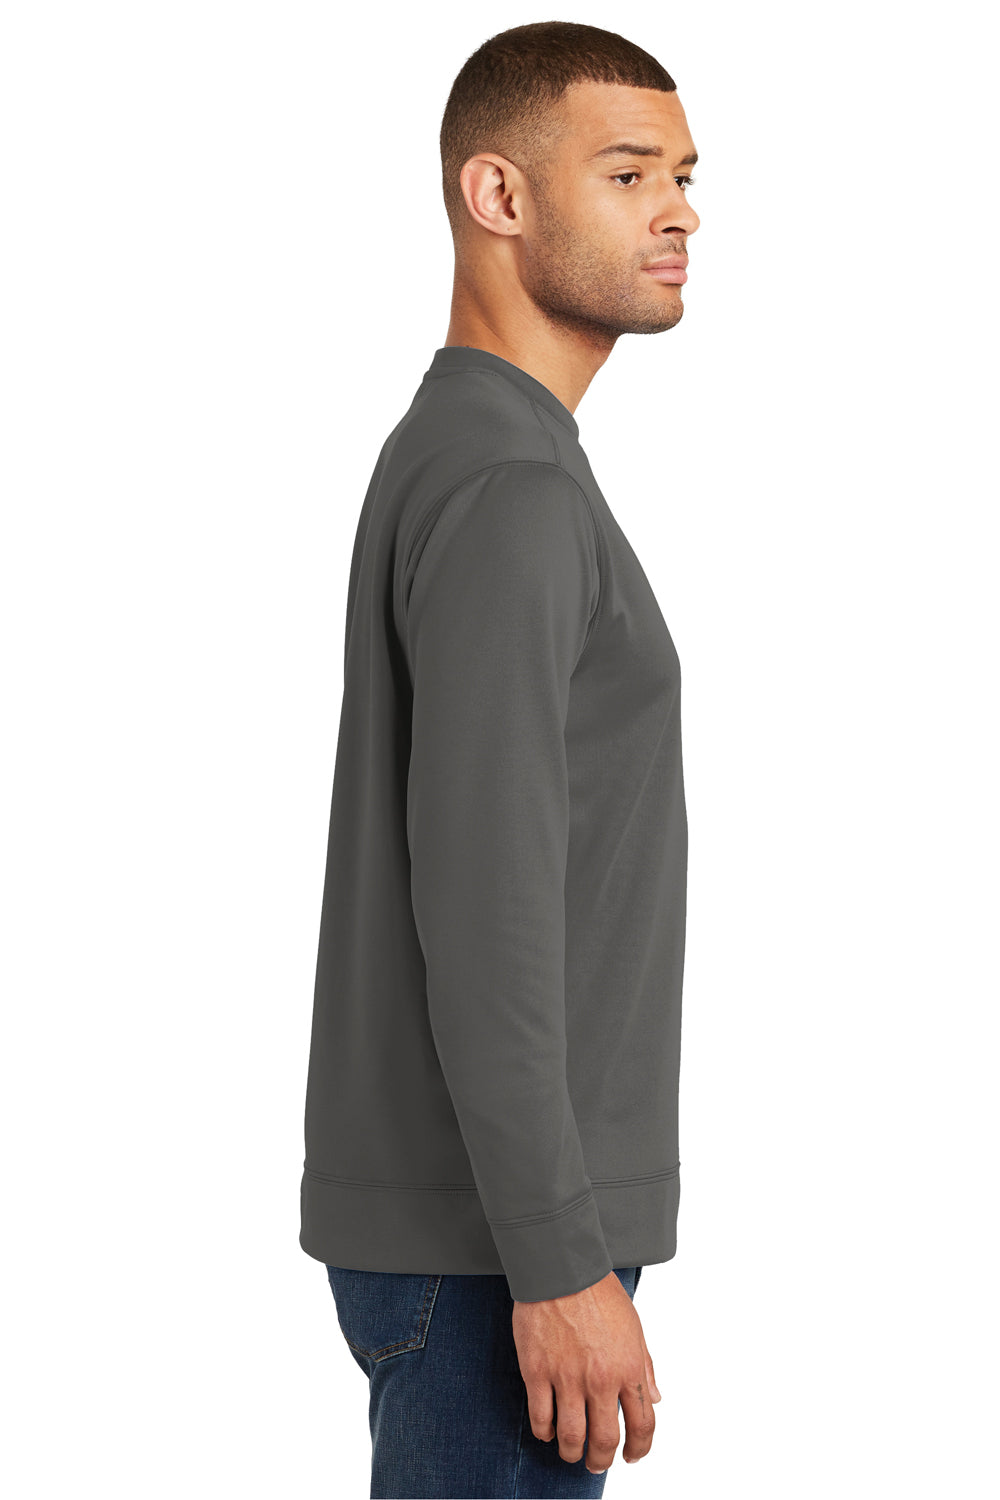 Port & Company PC590 Mens Dry Zone Performance Moisture Wicking Fleece Crewneck Sweatshirt Charcoal Grey Side